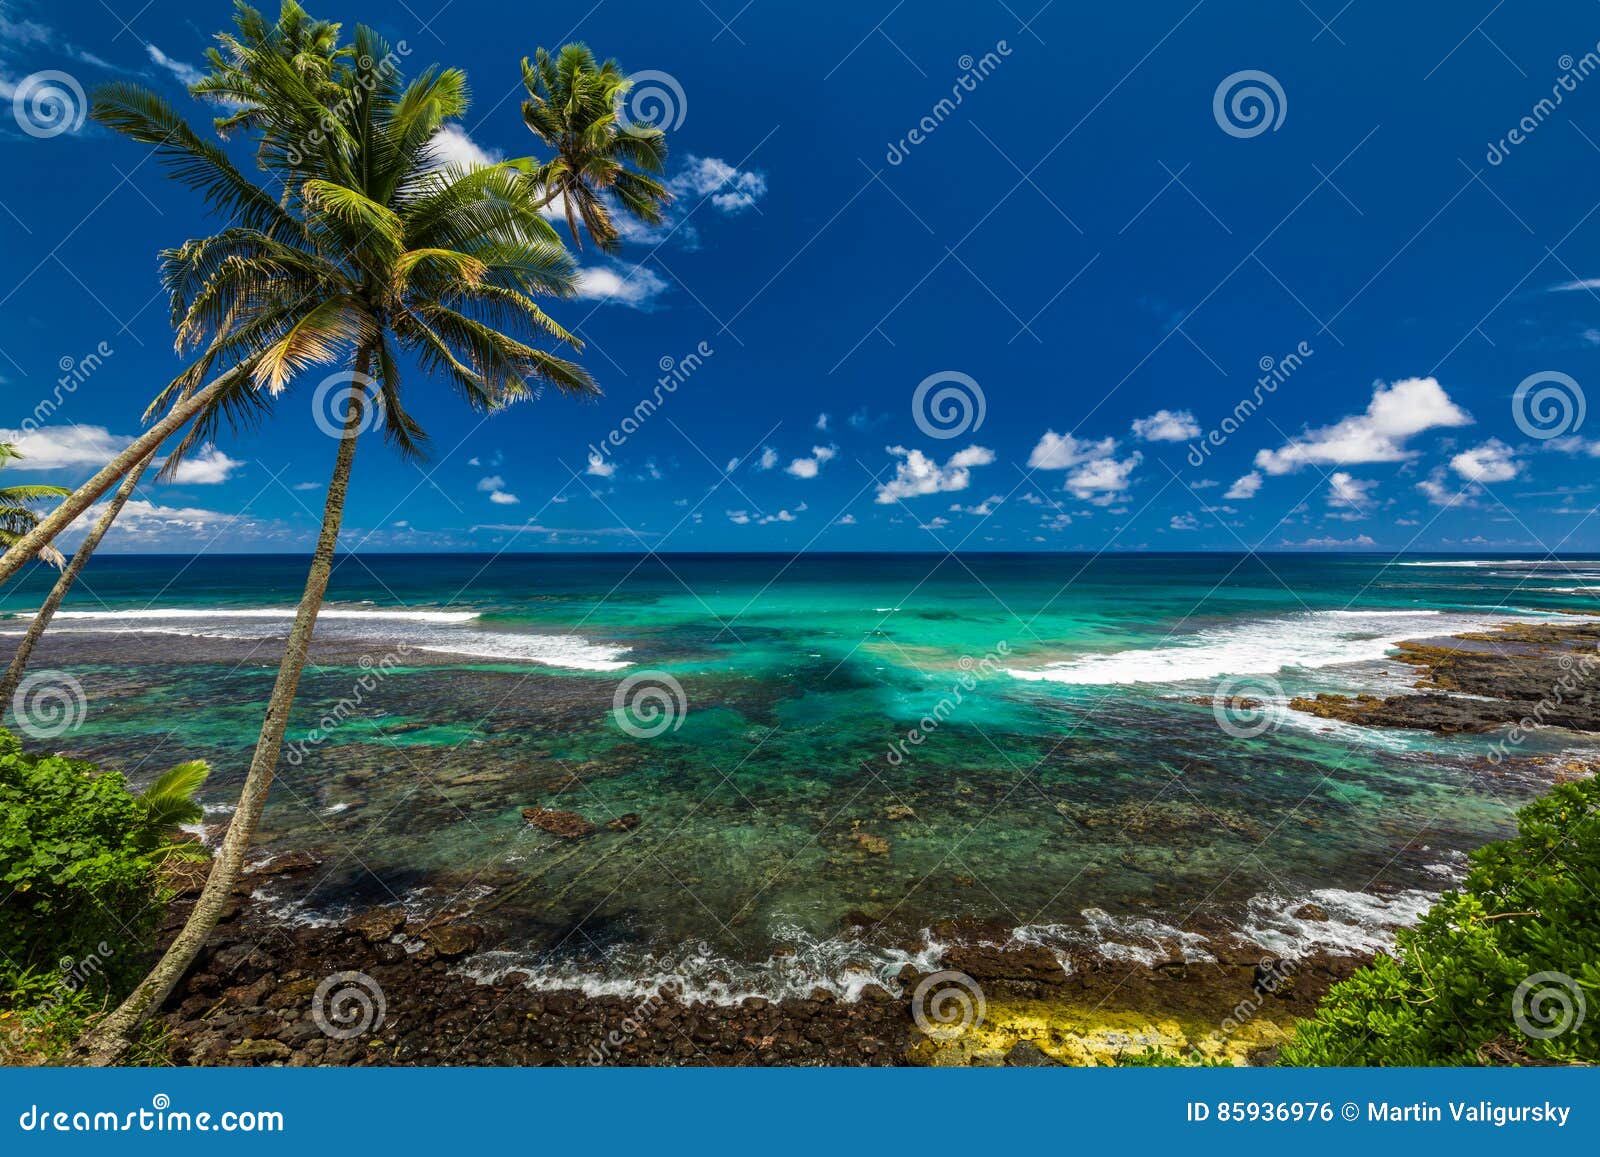 Tropical Volcanic Beach on Samoa Island with Many Palm Trees Stock ...